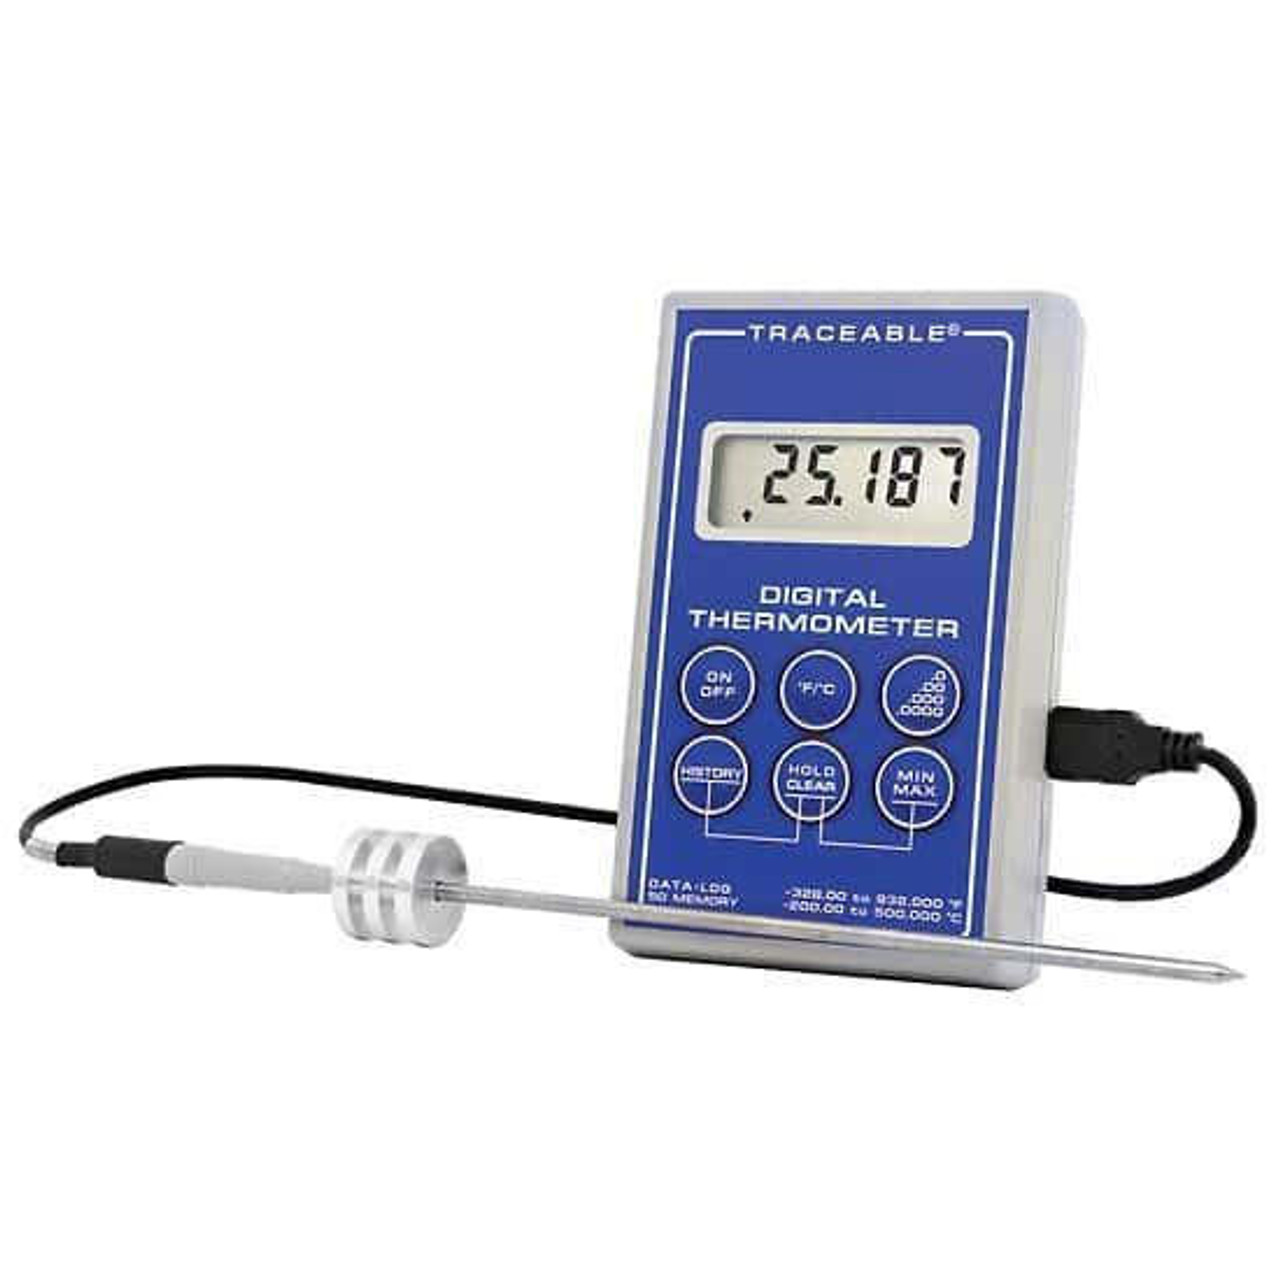 DeltaTrak 11040 FlashCheck Digital Food Thermometer